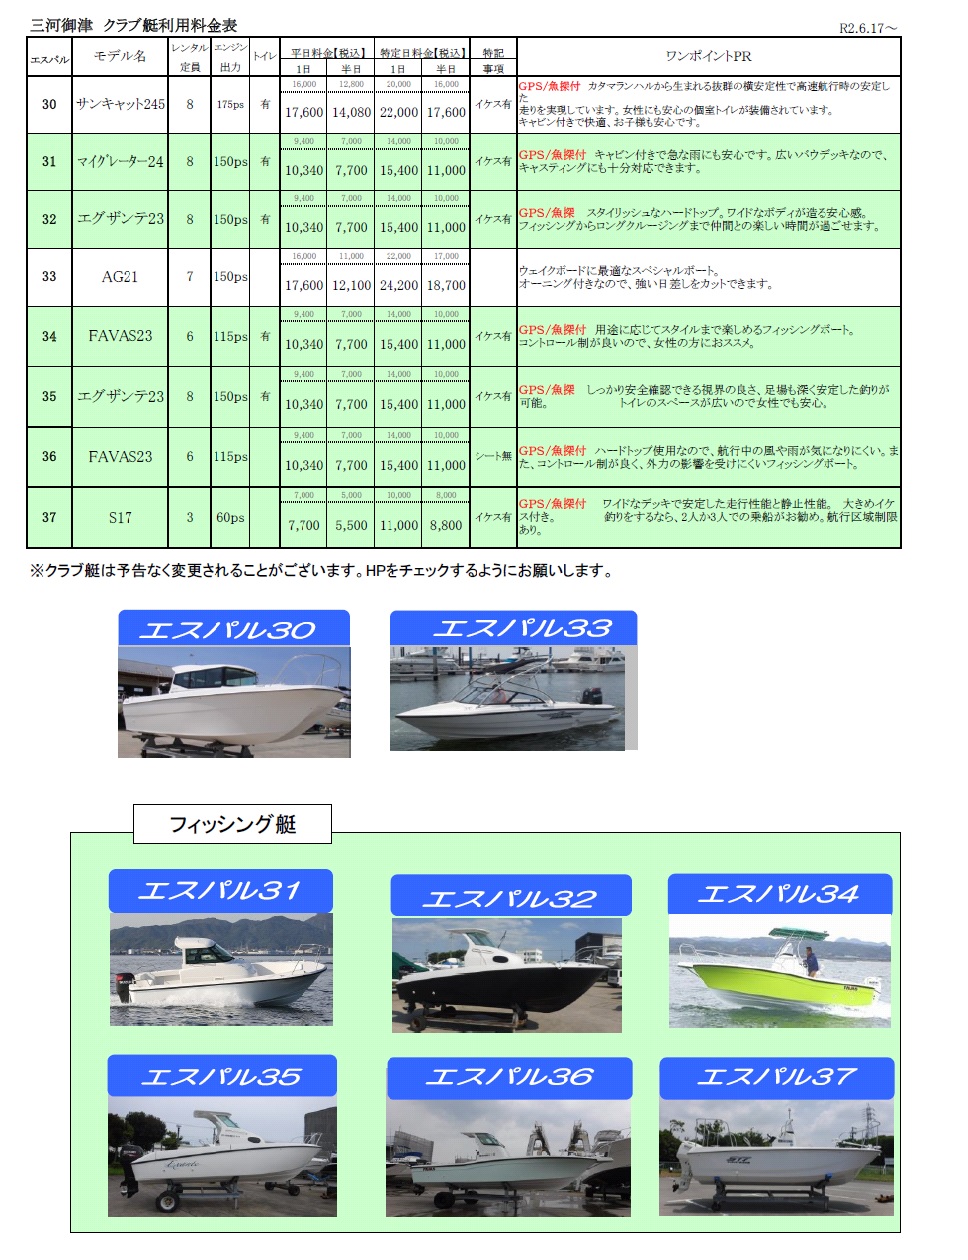 https://www.suzukimarine.co.jp/rental/blog/2020/06/17/img/%E7%84%A1%E9%A1%8C.jpg